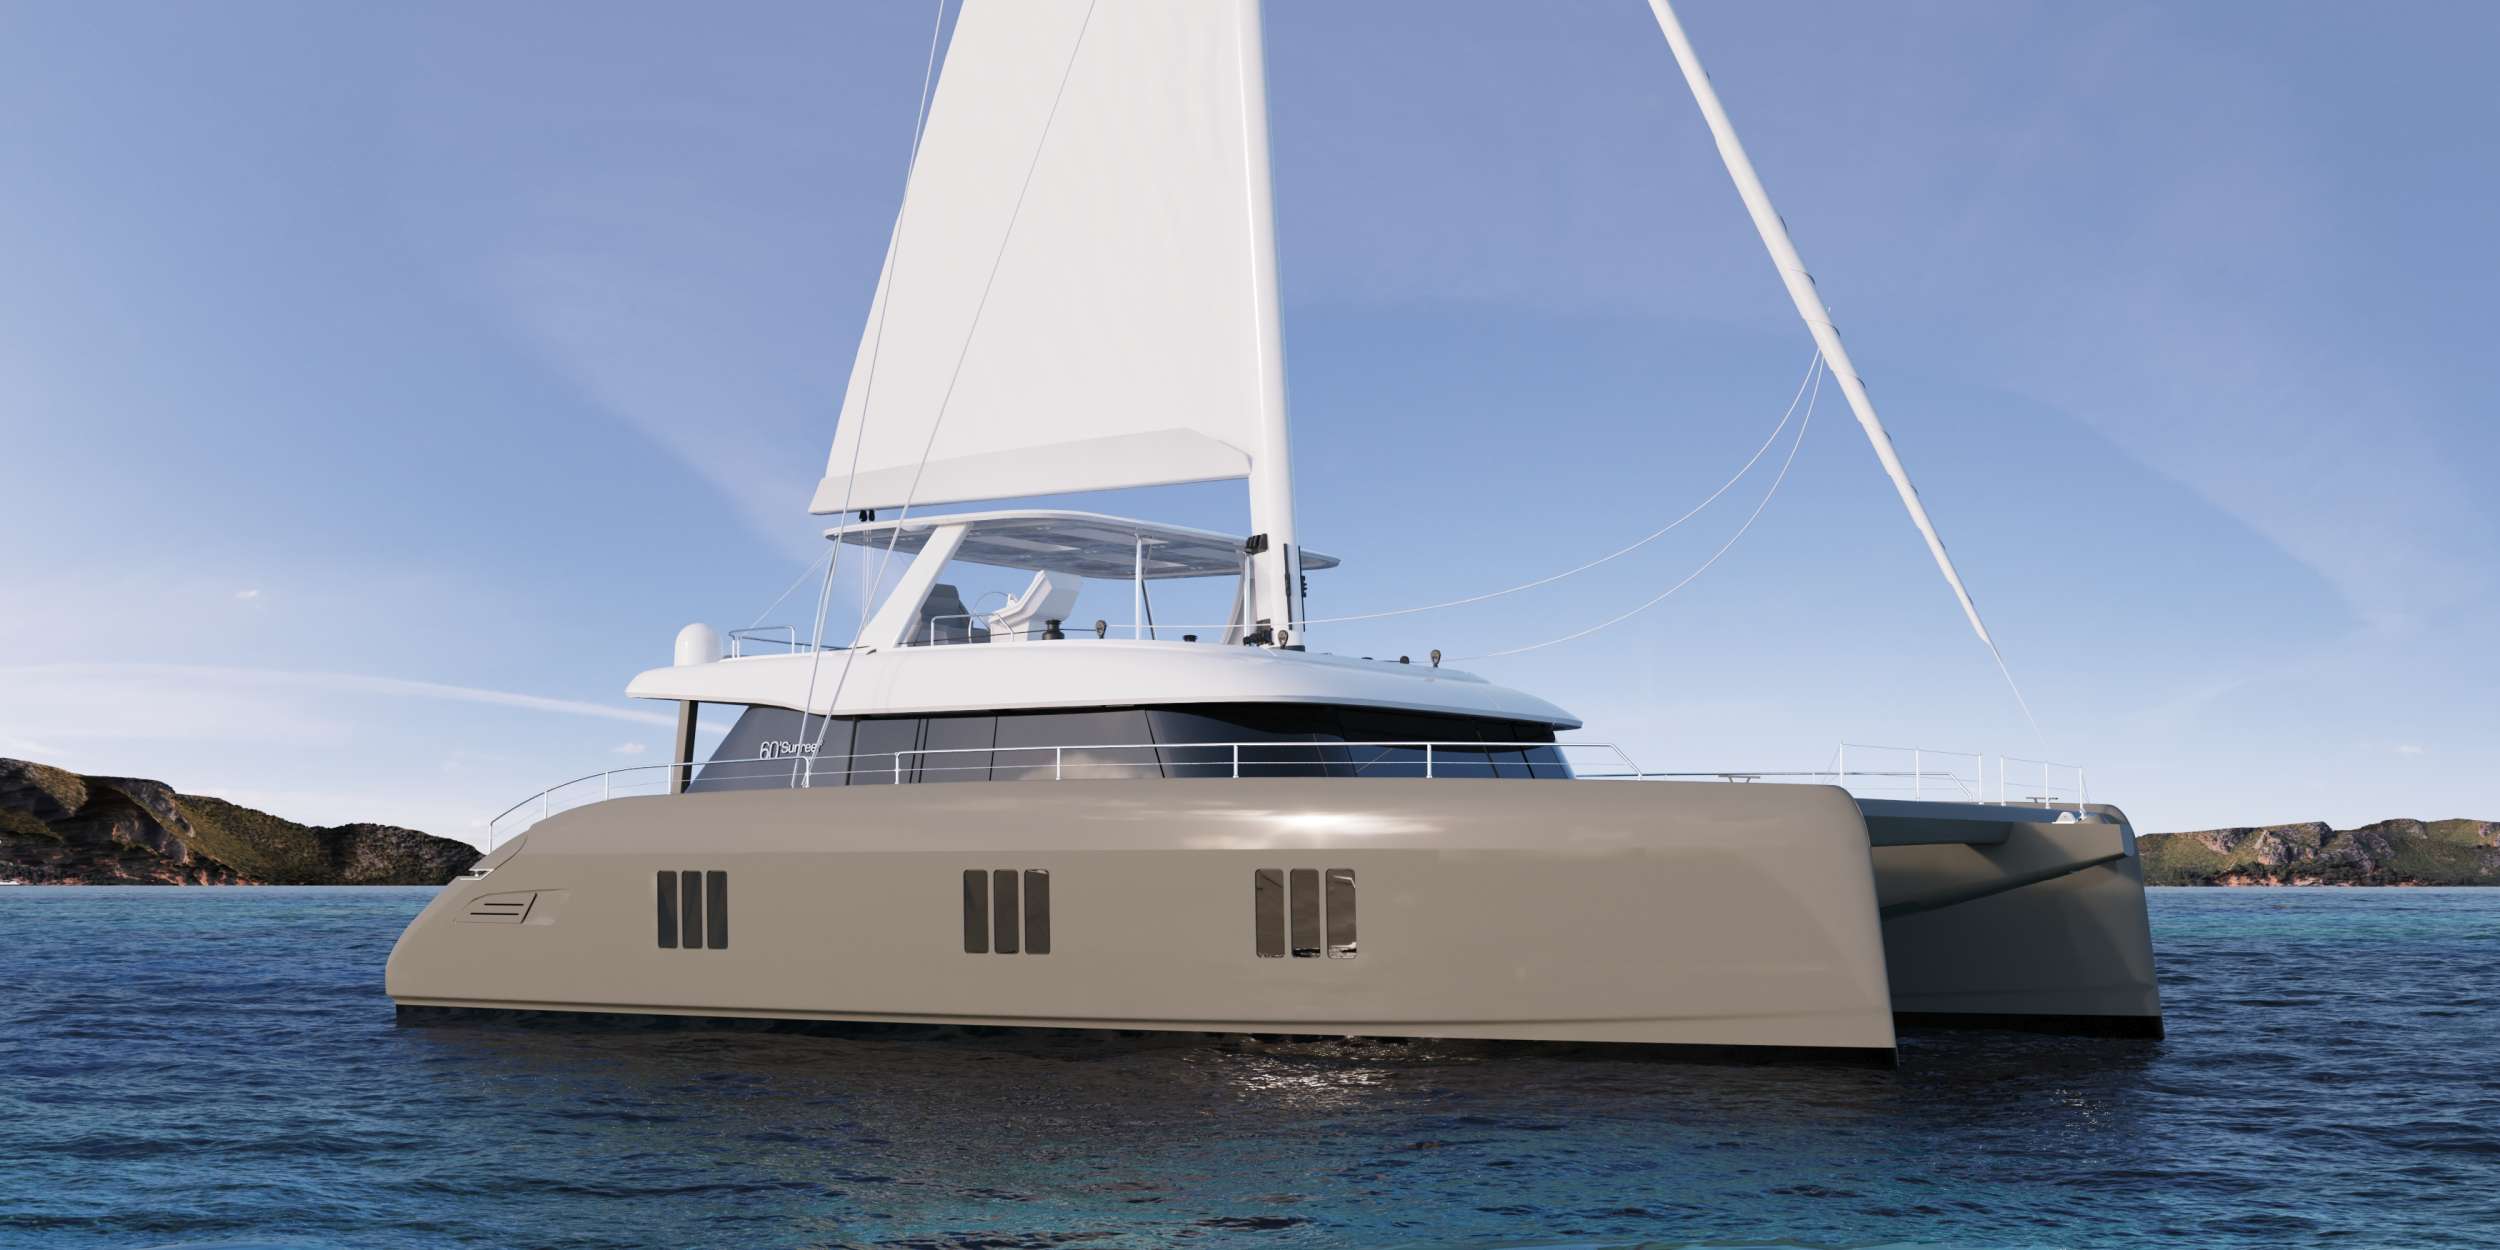 YLIME - Yacht Charter Monaco & Boat hire in Fr. Riviera, Corsica & Sardinia 1